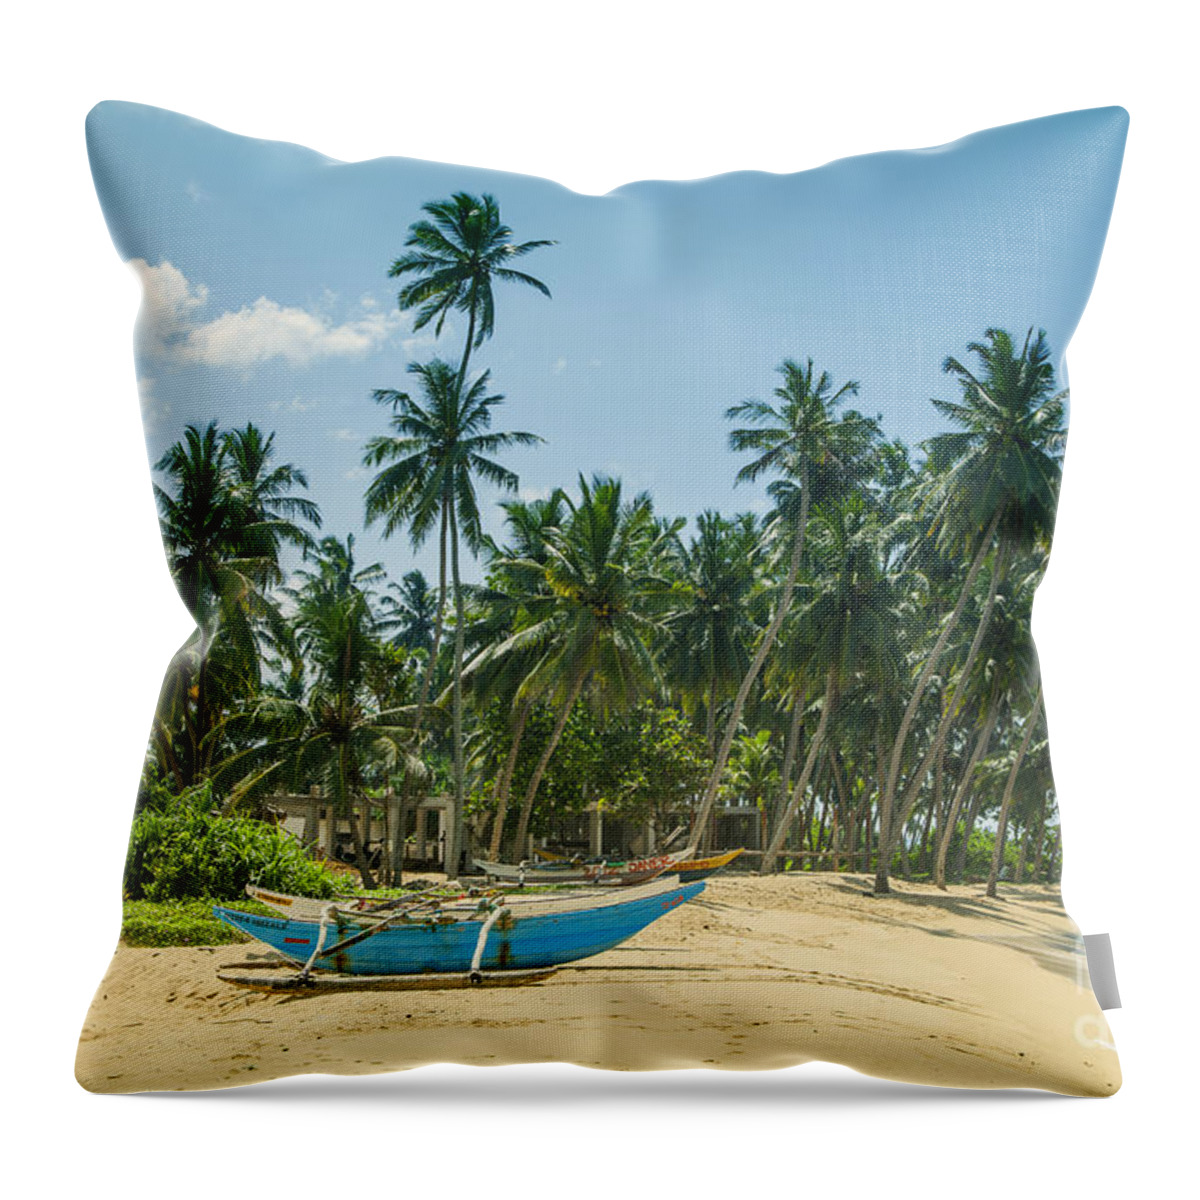 Catamaran Throw Pillow featuring the photograph Blue Catamaran at a beach with coconut palm trees by Gina Koch